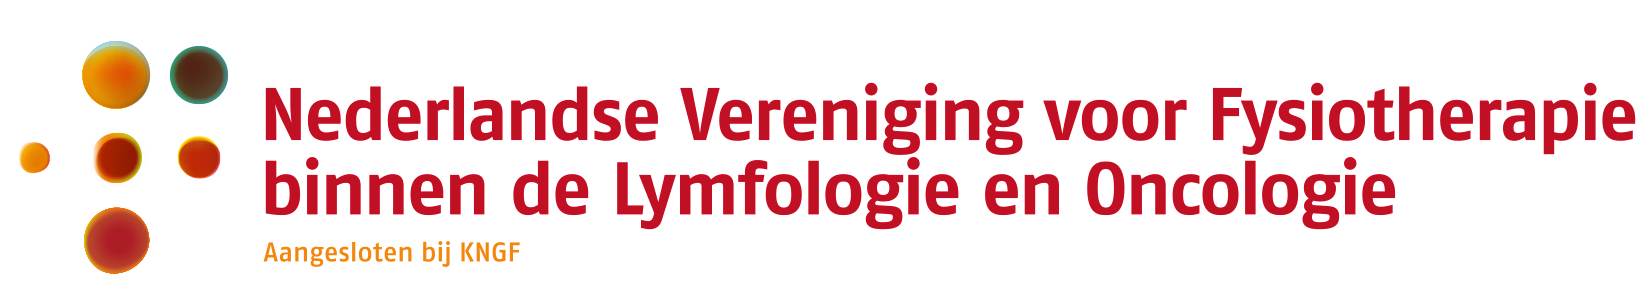 logo-kngf-lymfologie.png